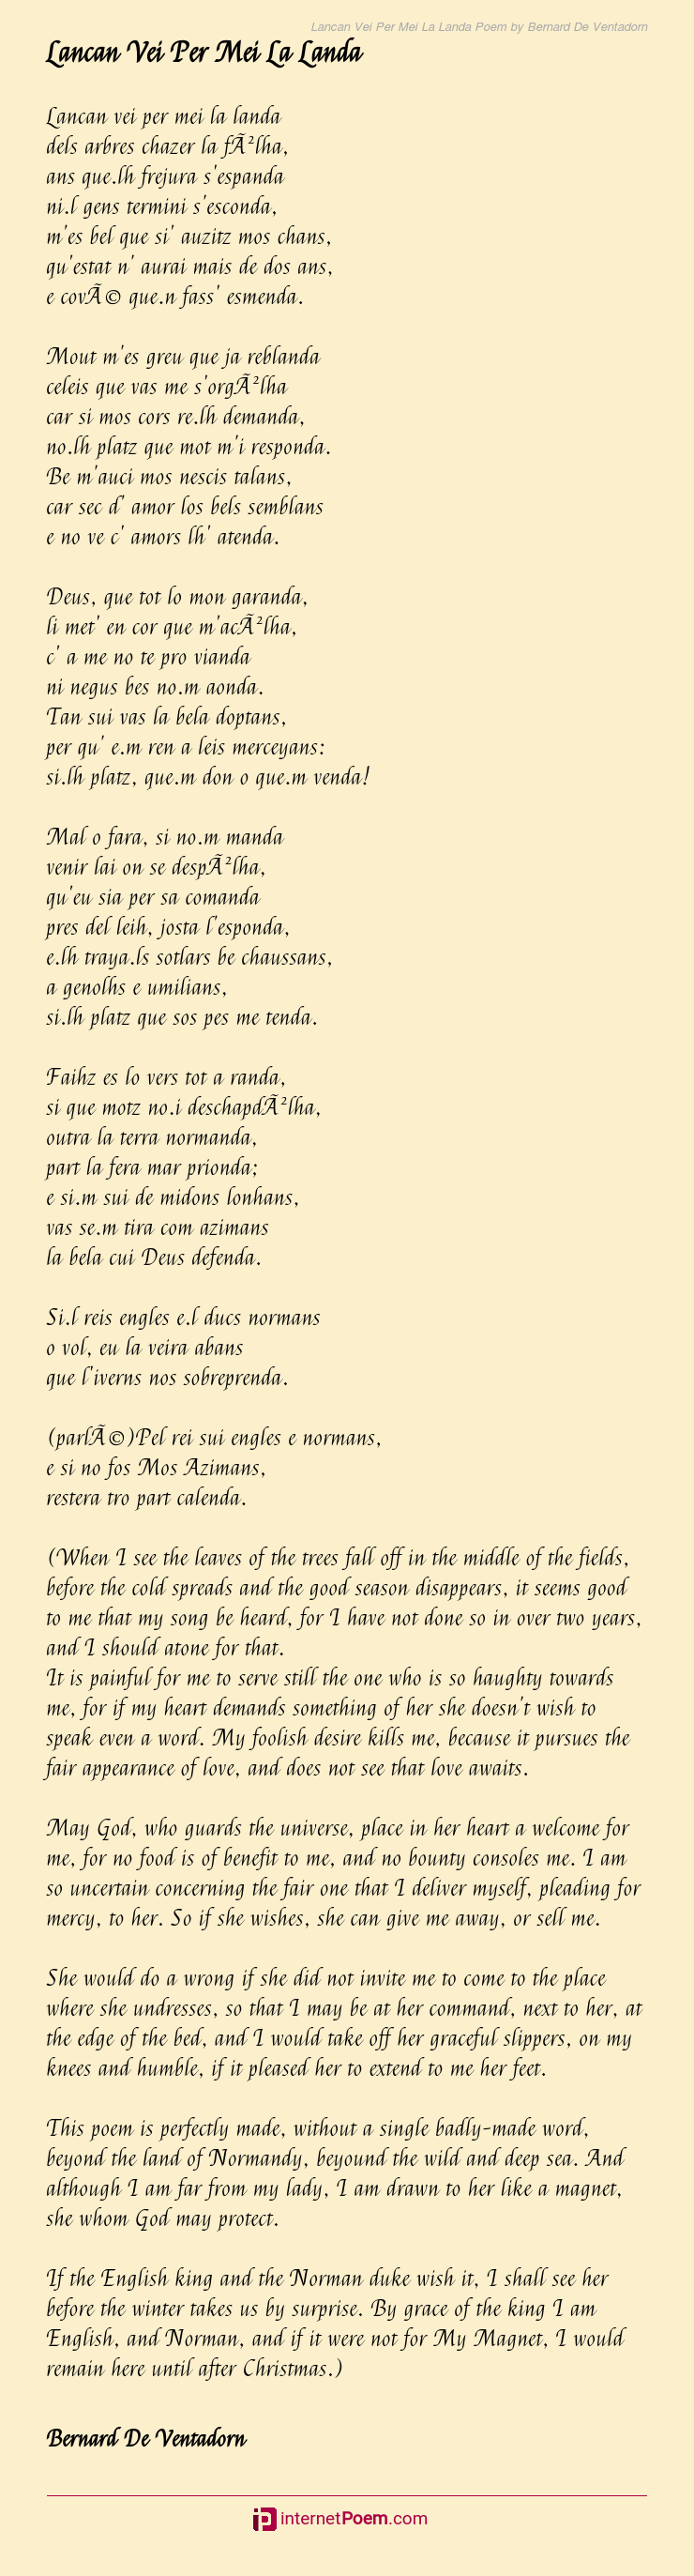 Lancan Vei Per Mei La Landa Poem By Bernard De Ventadorn